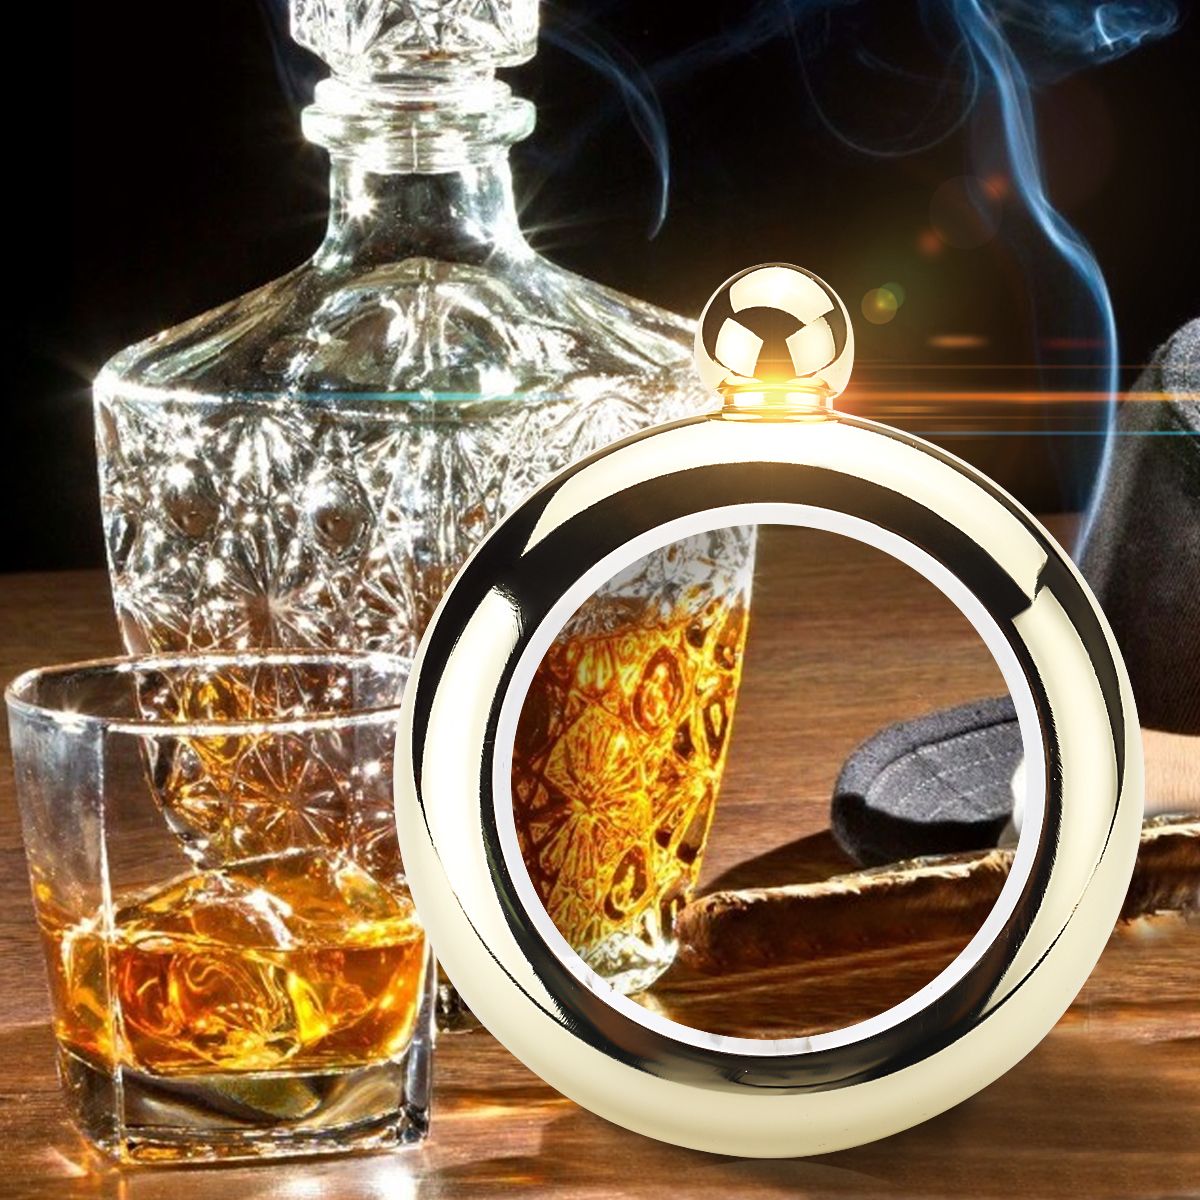 Bracelet-Bangle-Flask-Drinking-Stainless-Steel-Whiskey-Hidden-Hip-Flasket-Jewelry-Gadget-1235443